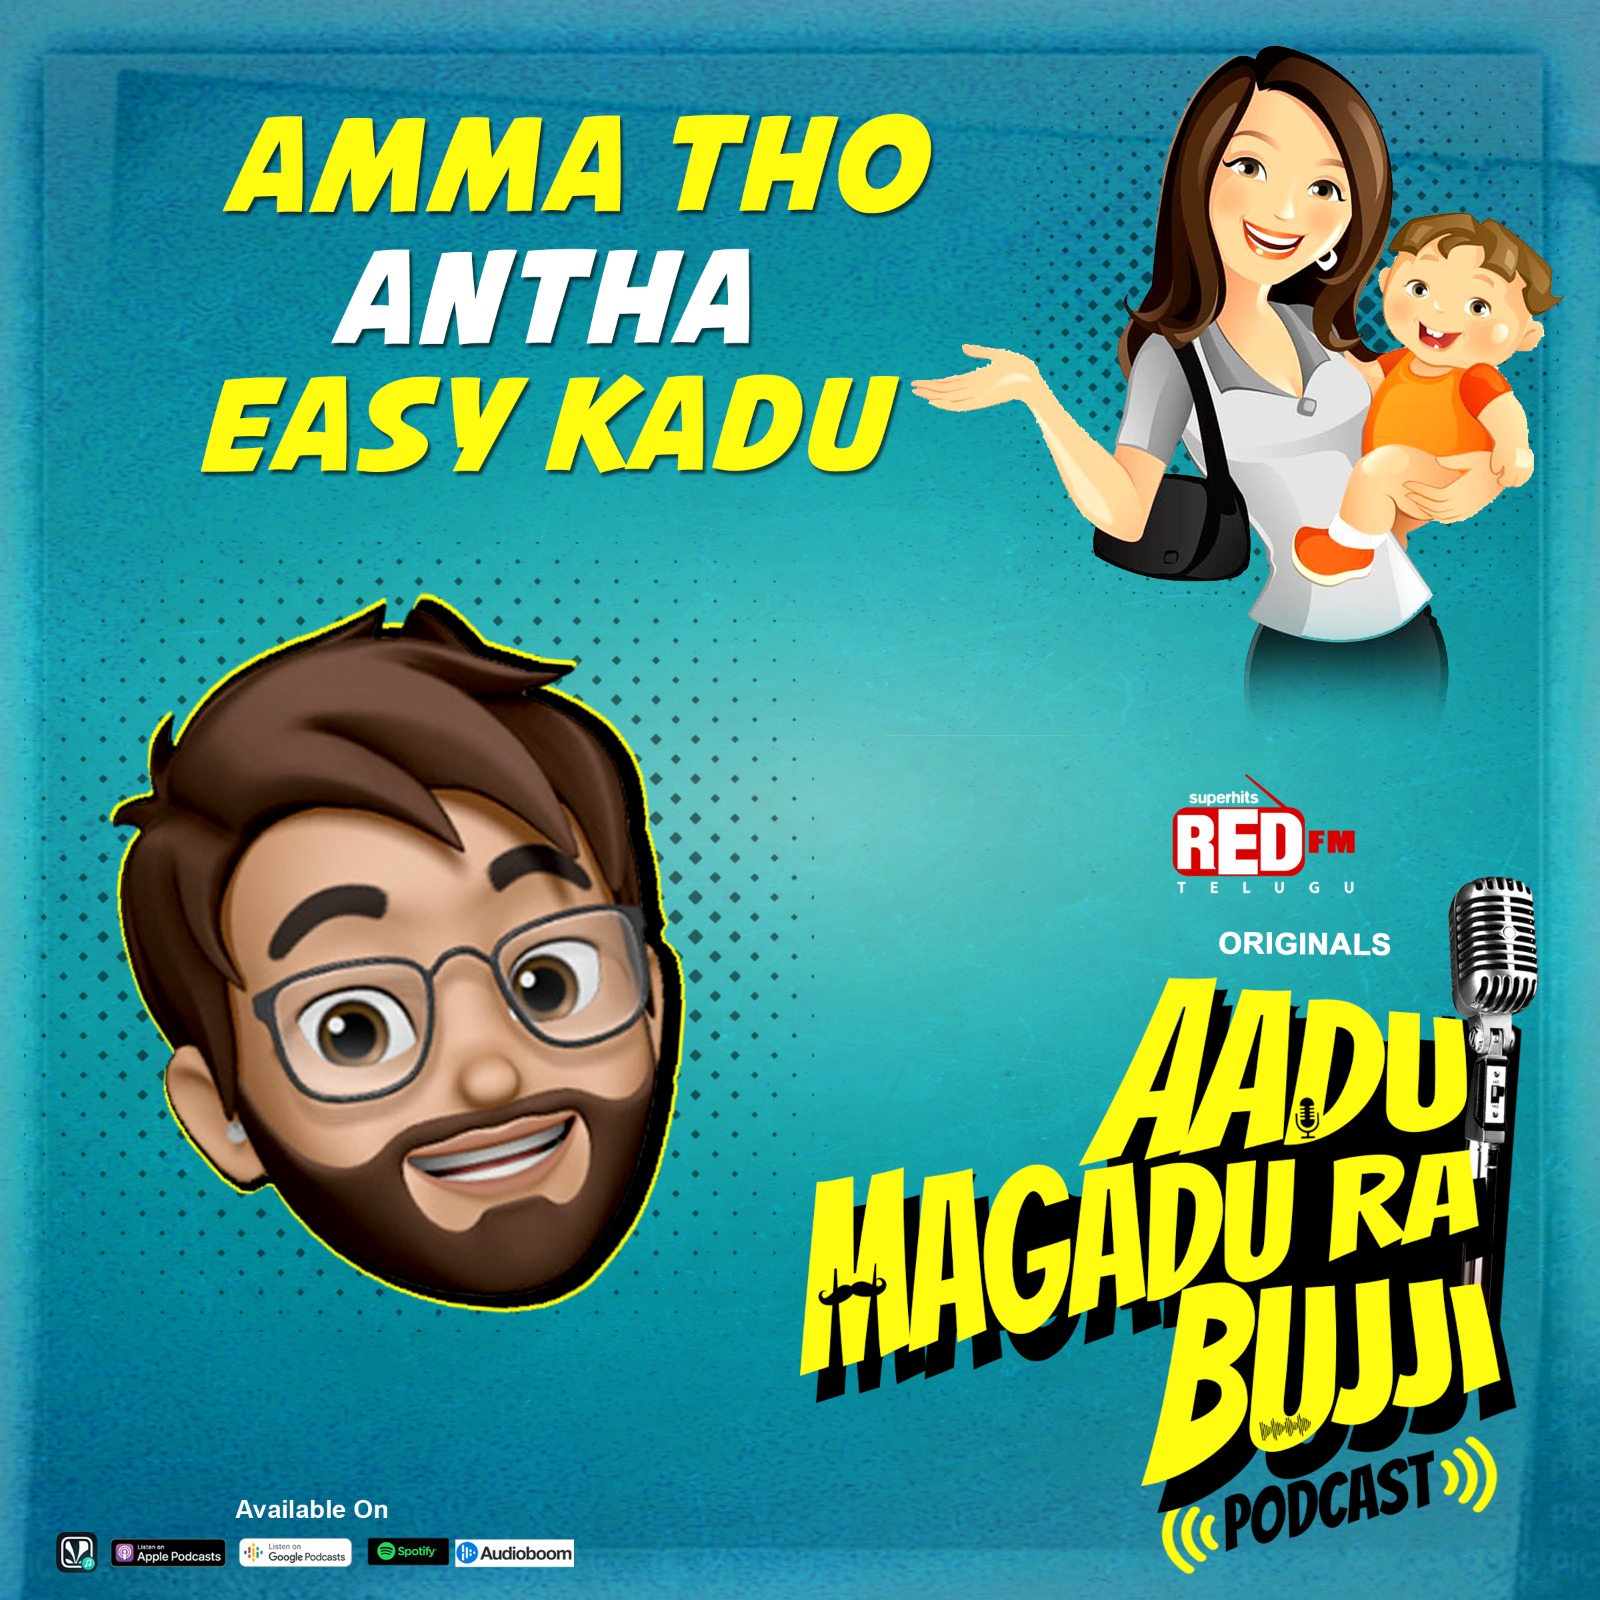 Amma tho Antha Easy Kadu | E95 | Aadu Magadu Ra Bujji | Red FM Telugu